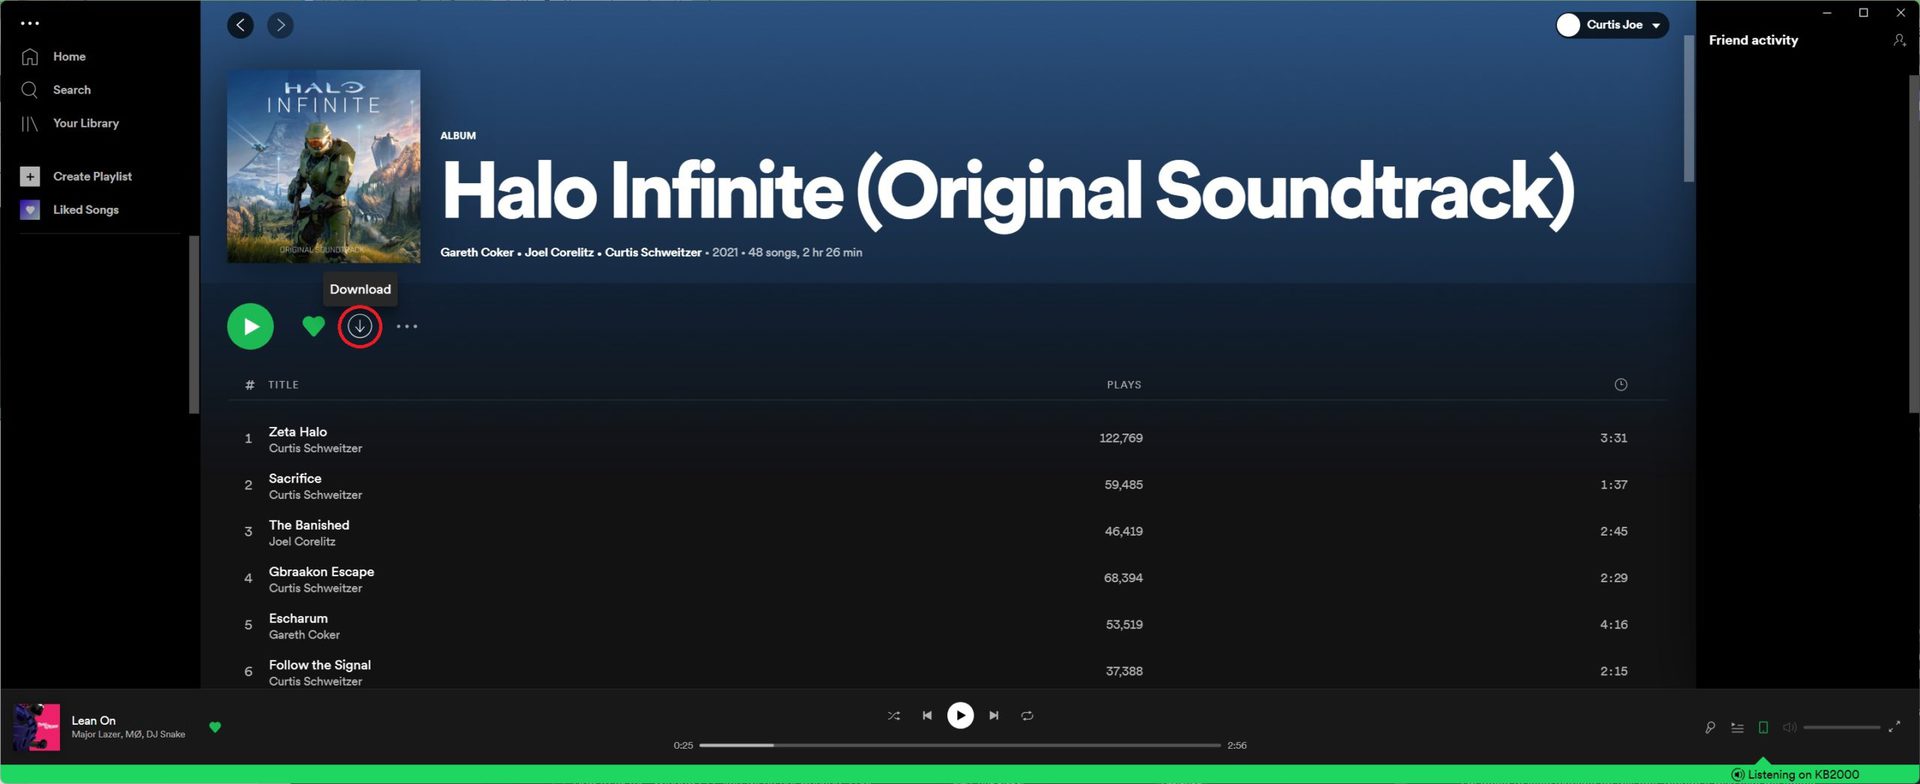 The Halo album on desktop